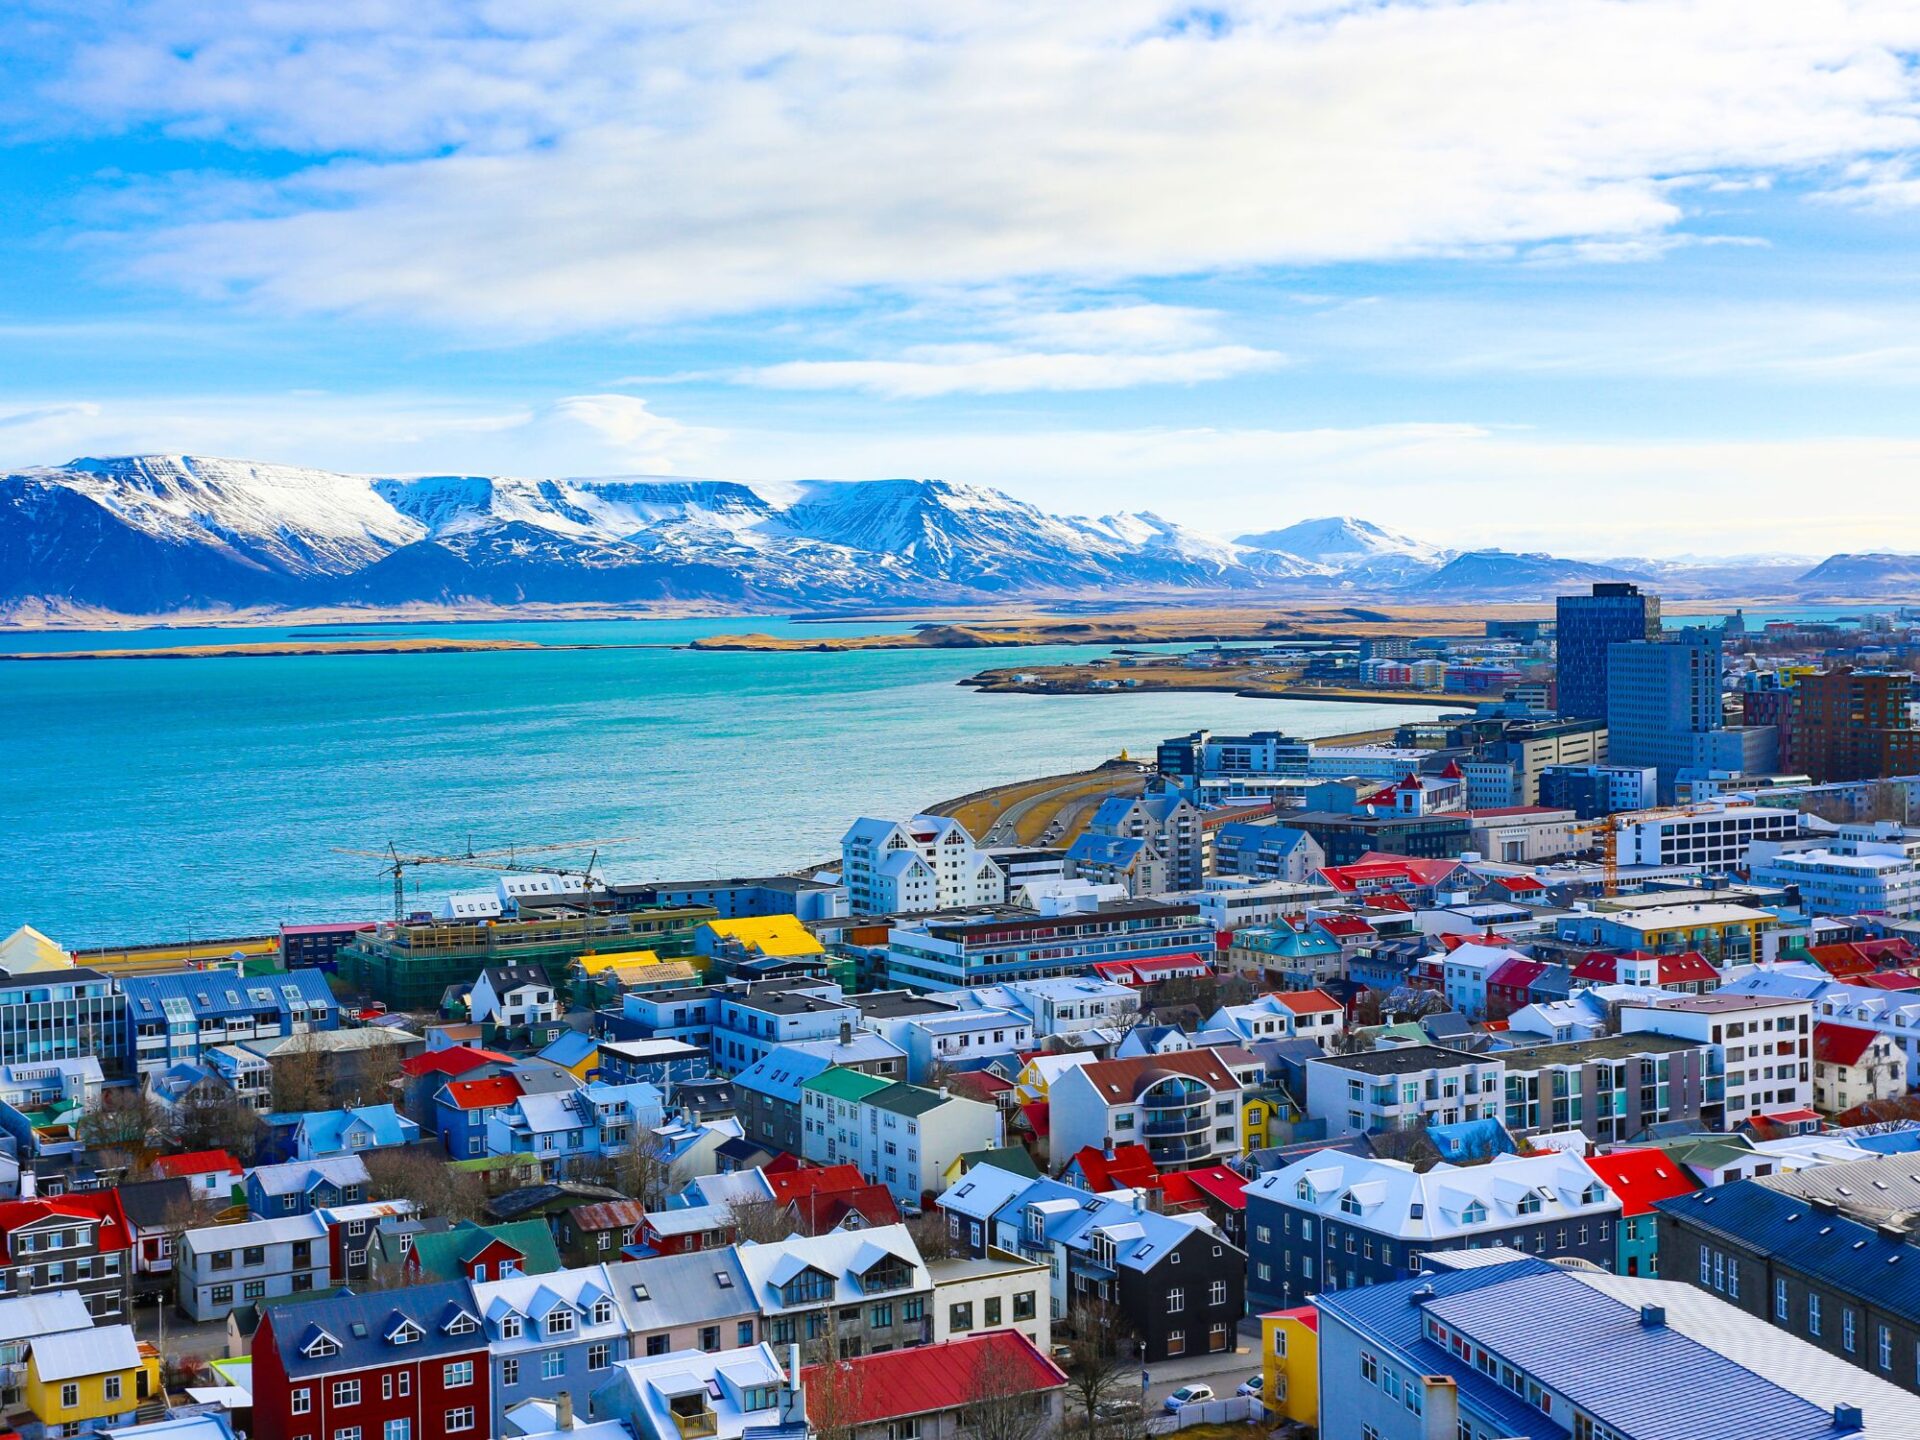 Must visit destinations in Scandinavia - Reykjavik, Iceland